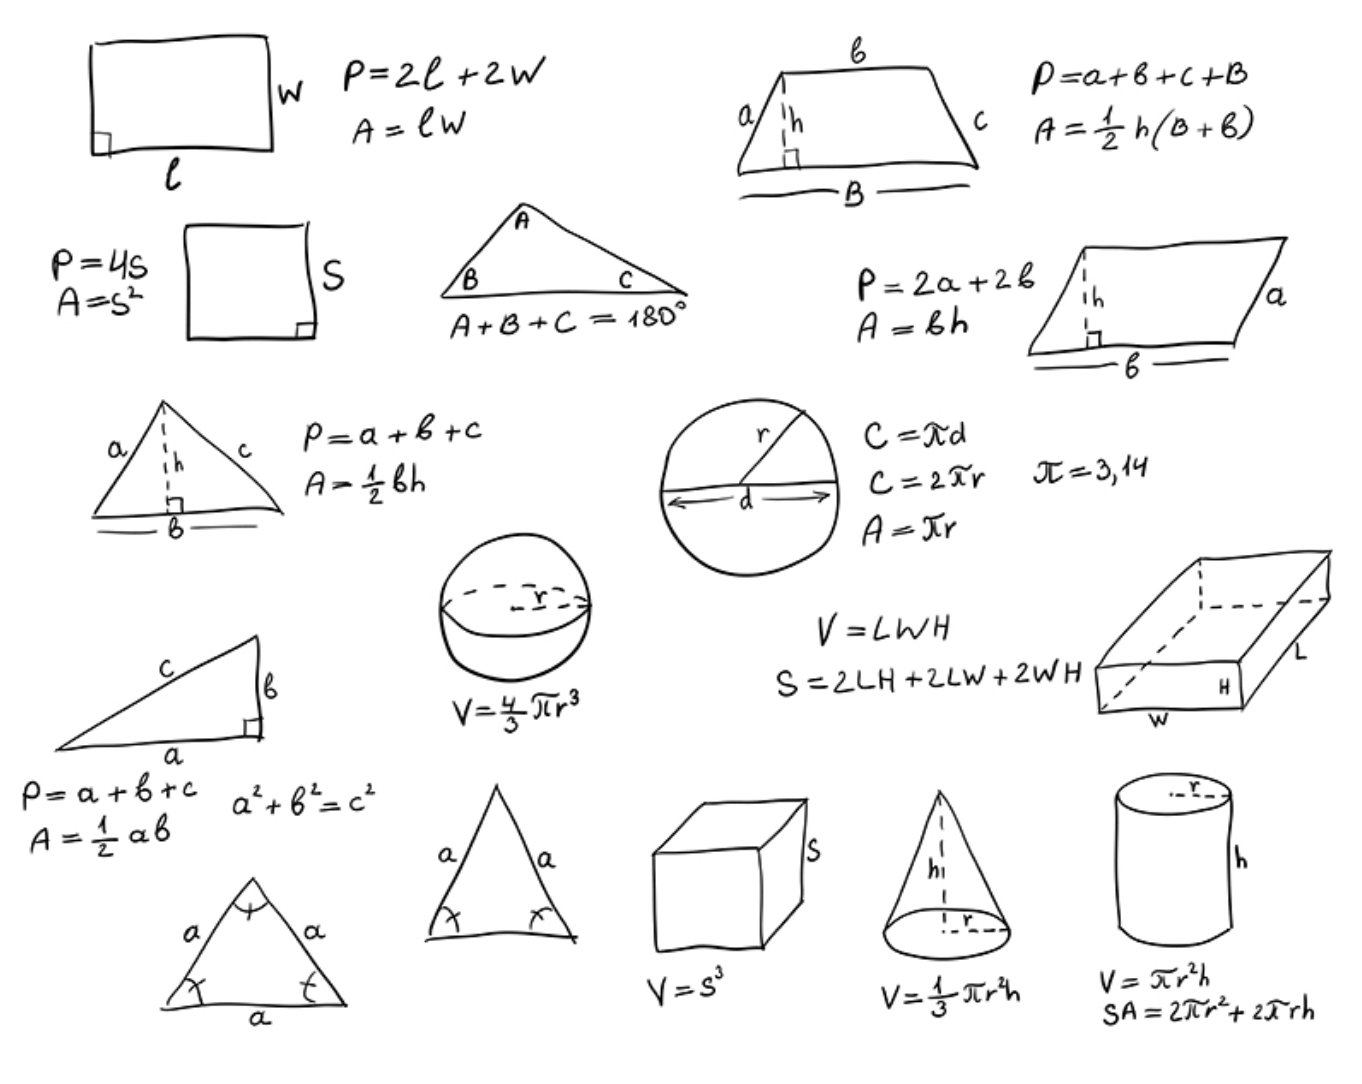 base geometry